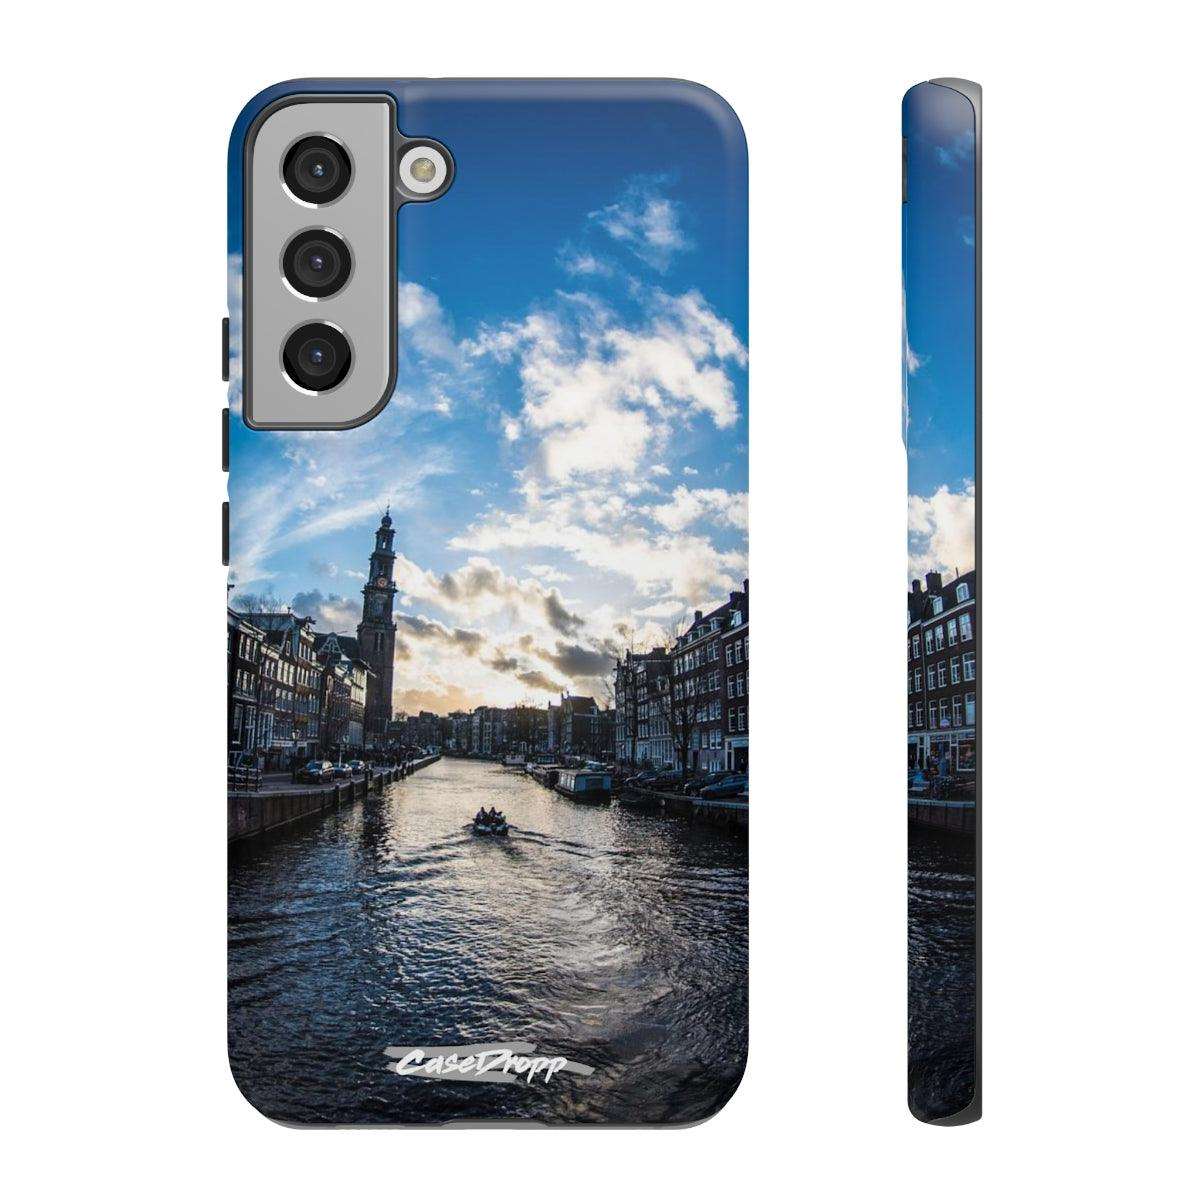 Amsterdam - Tough Samsung Case CaseDropp